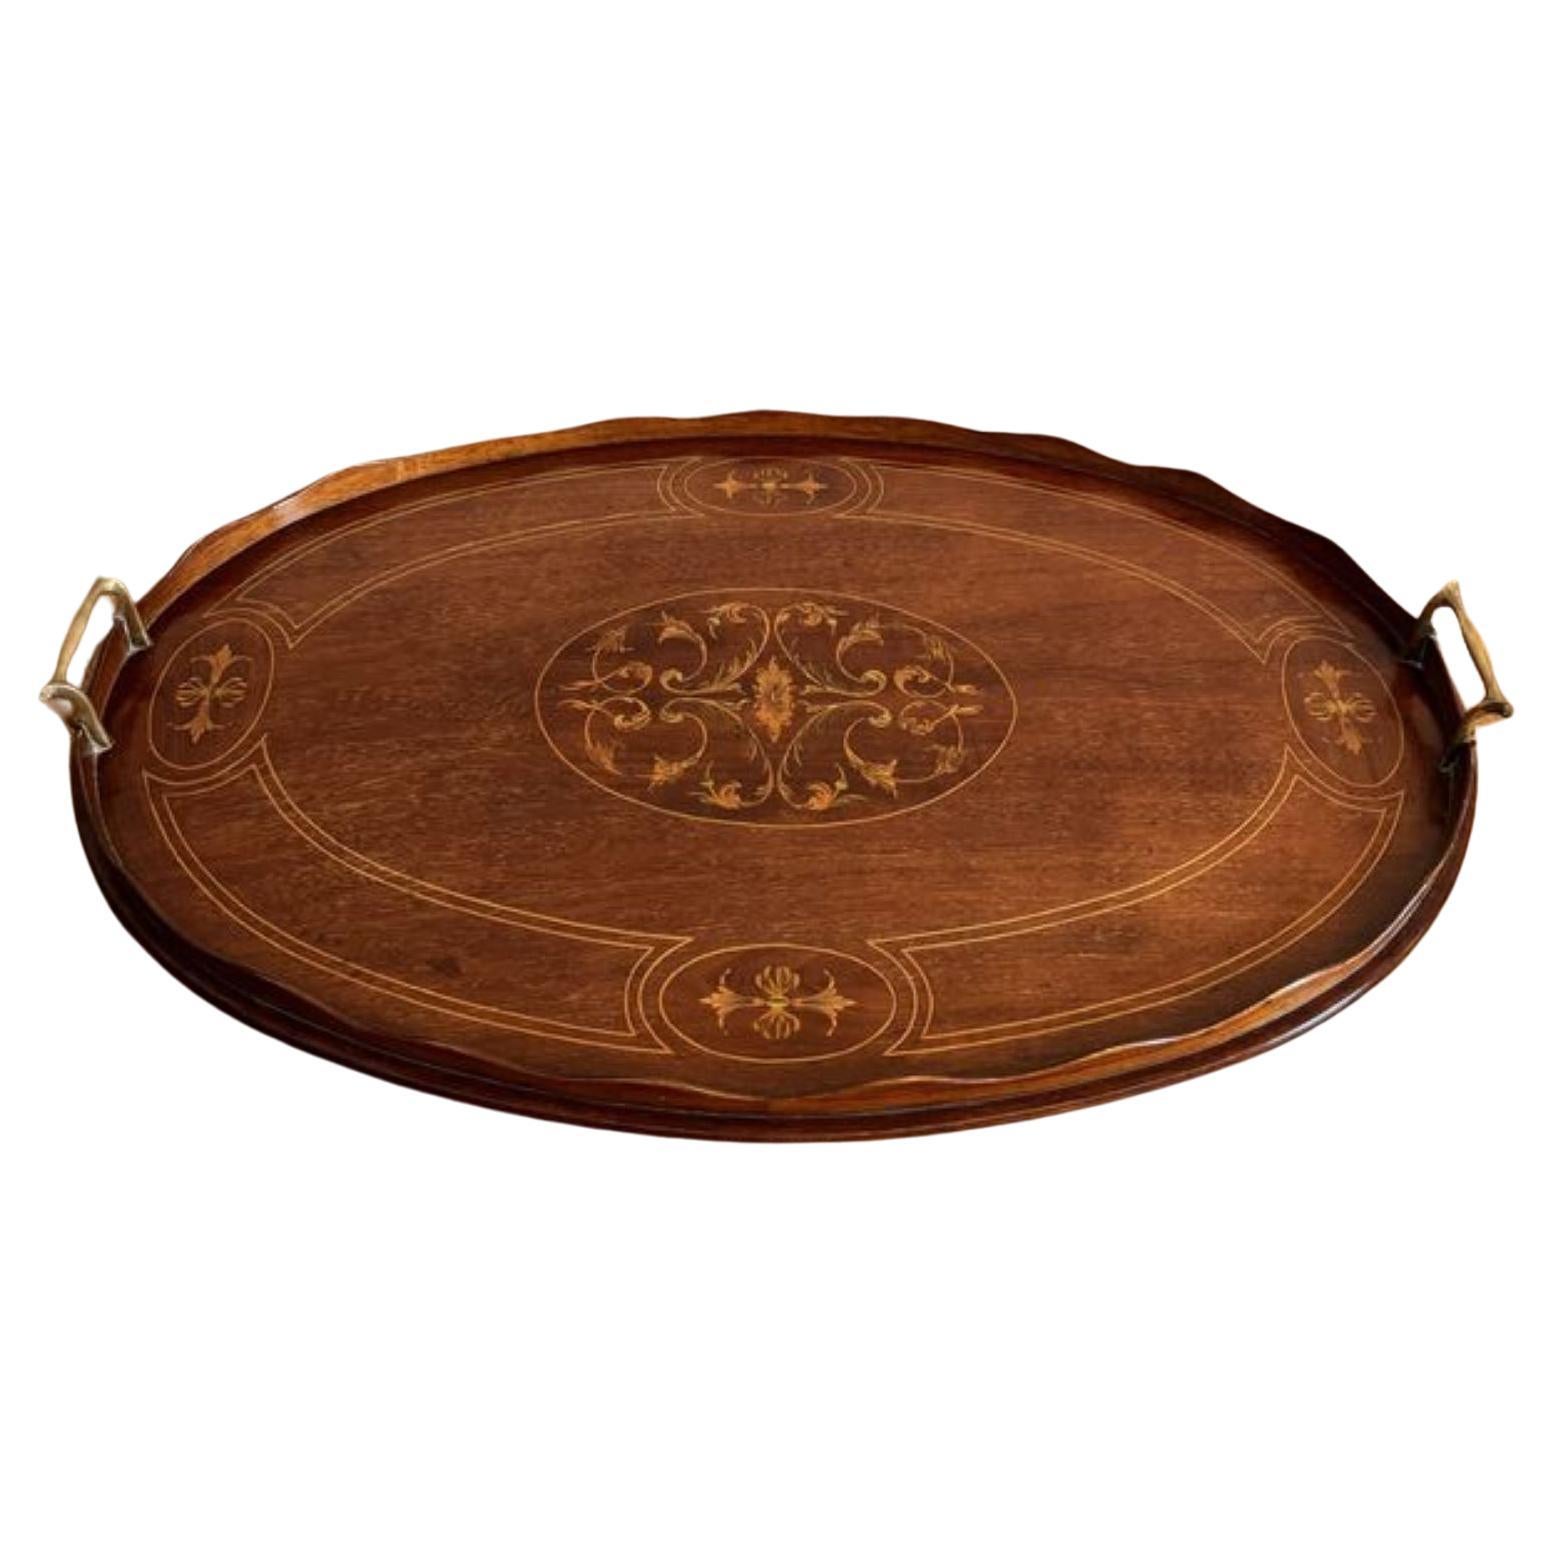 Antikes edwardianisches ovales Teetablett aus Mahagoni mit Intarsien in Qualität